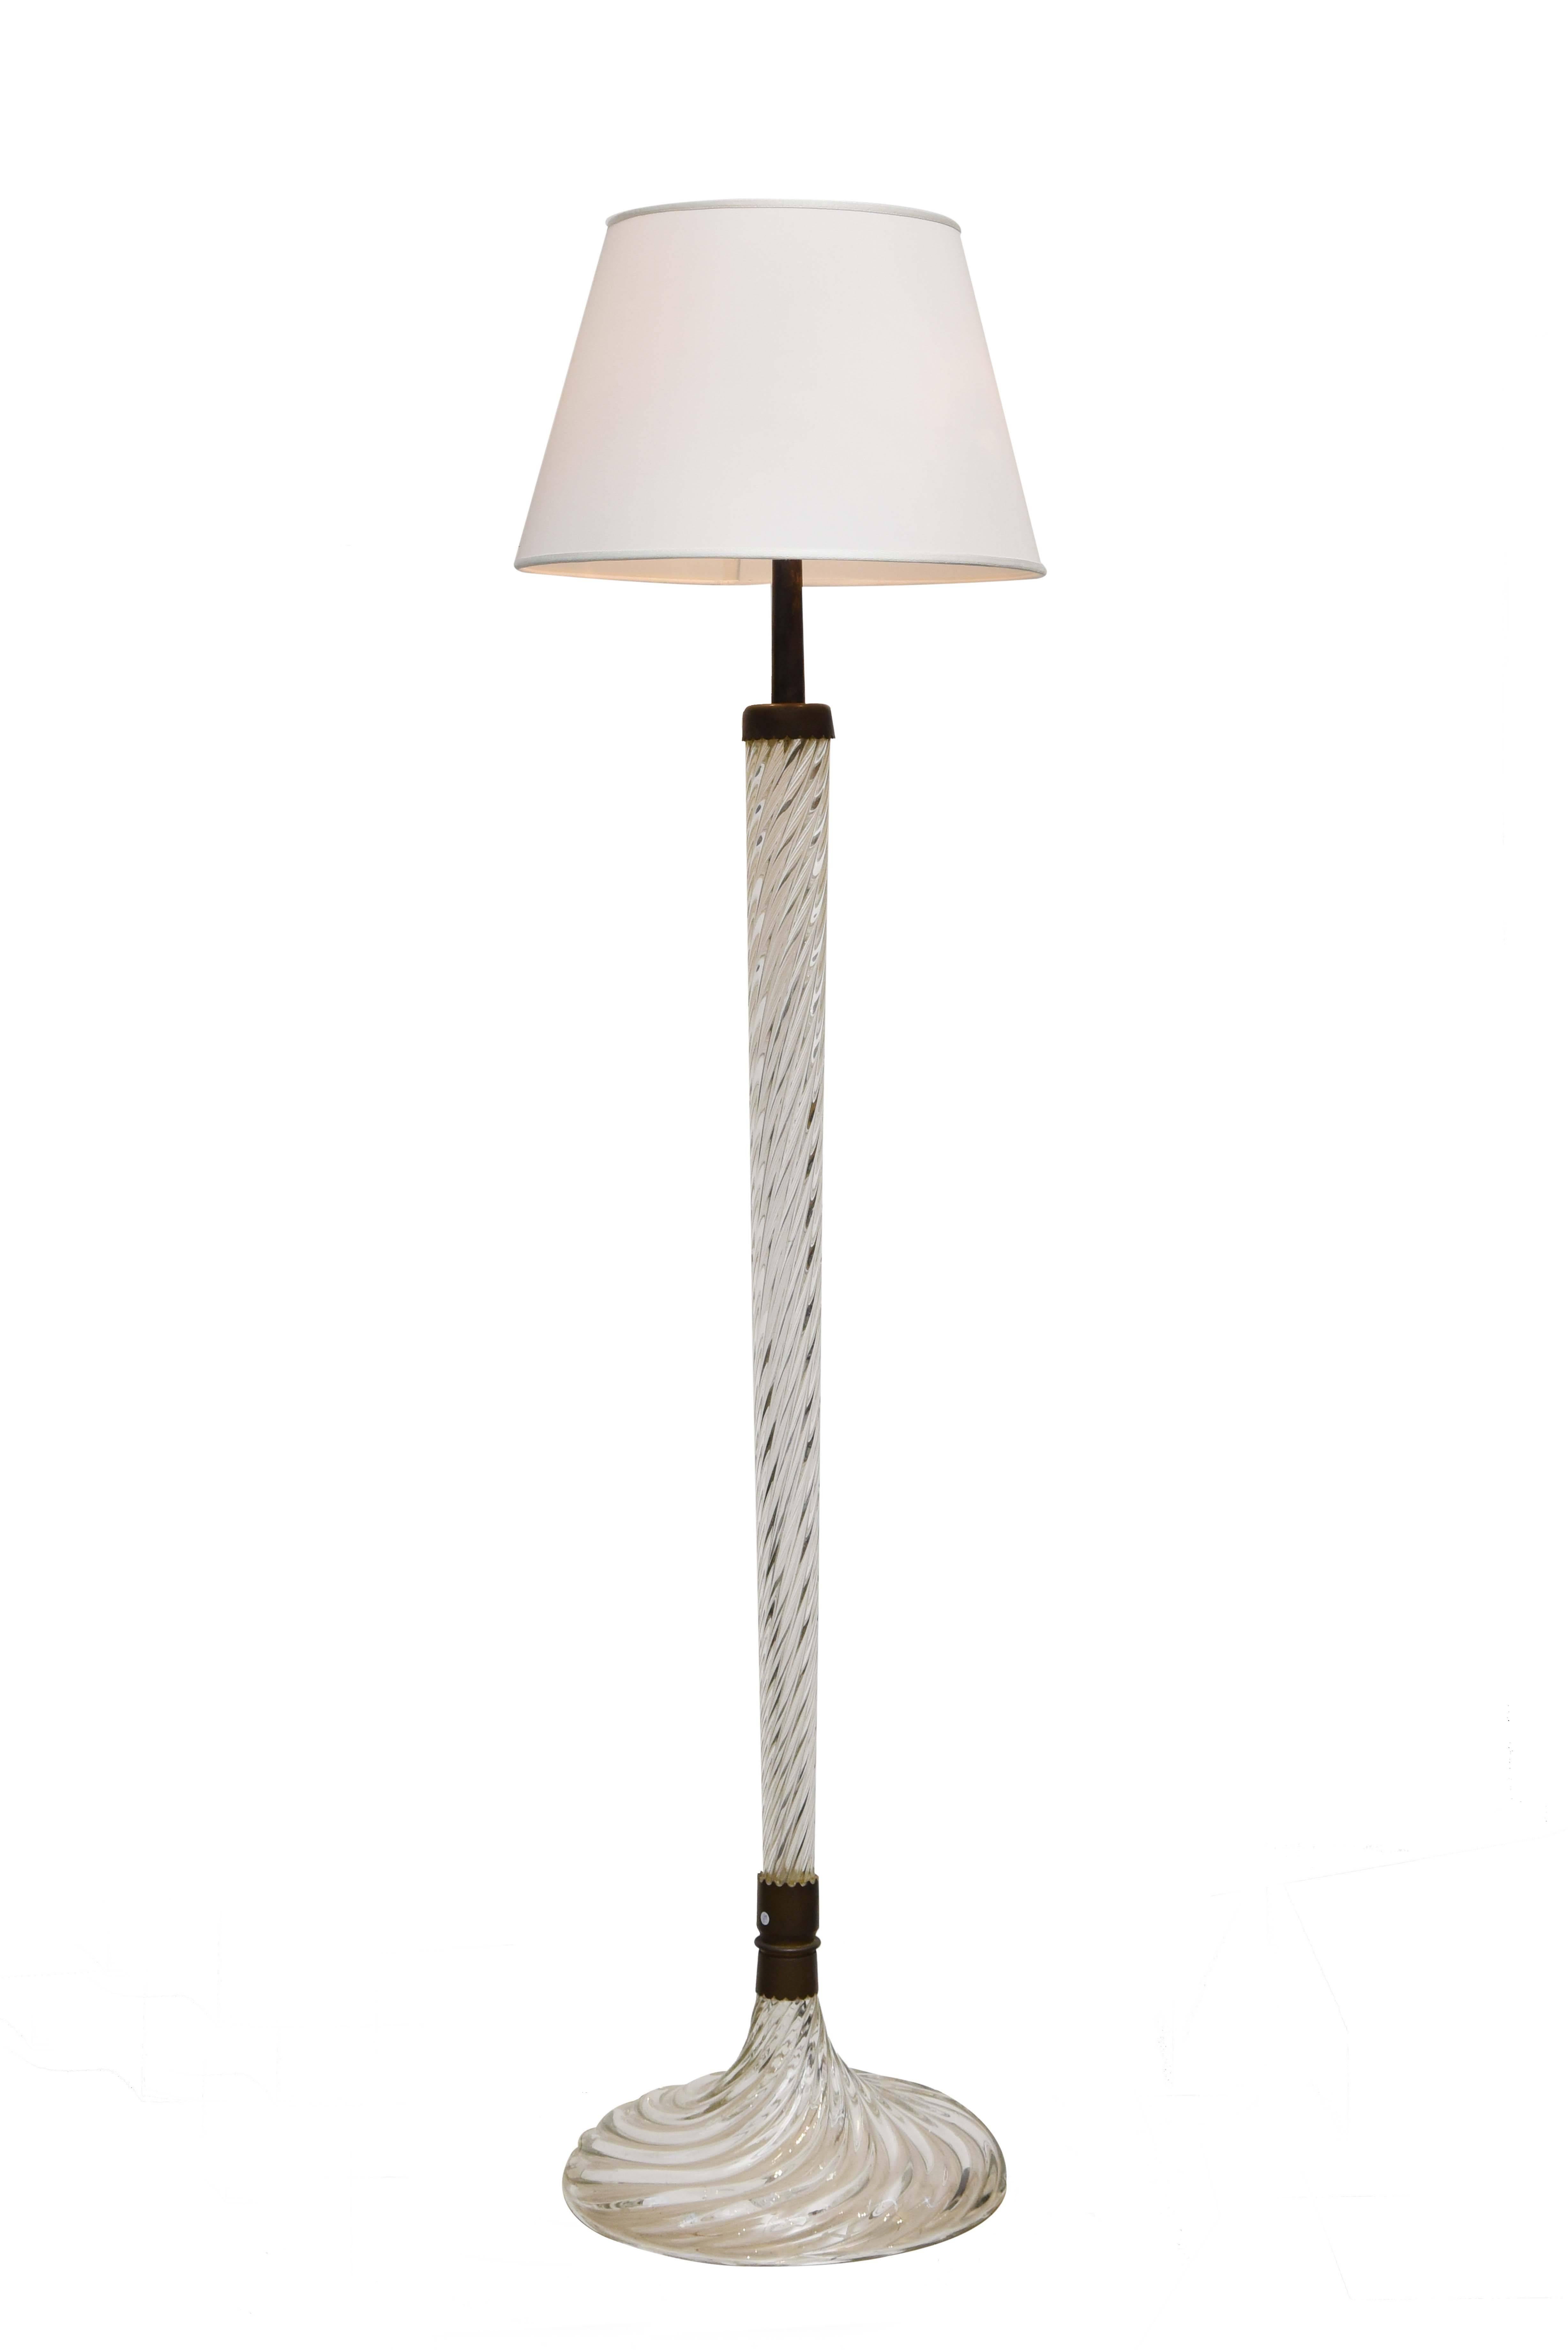 "Rigato" glass floor lamp.
Transparent Murano glass, brass details.
Measures: H cm 166, L cm 35
Murano, 1940s.